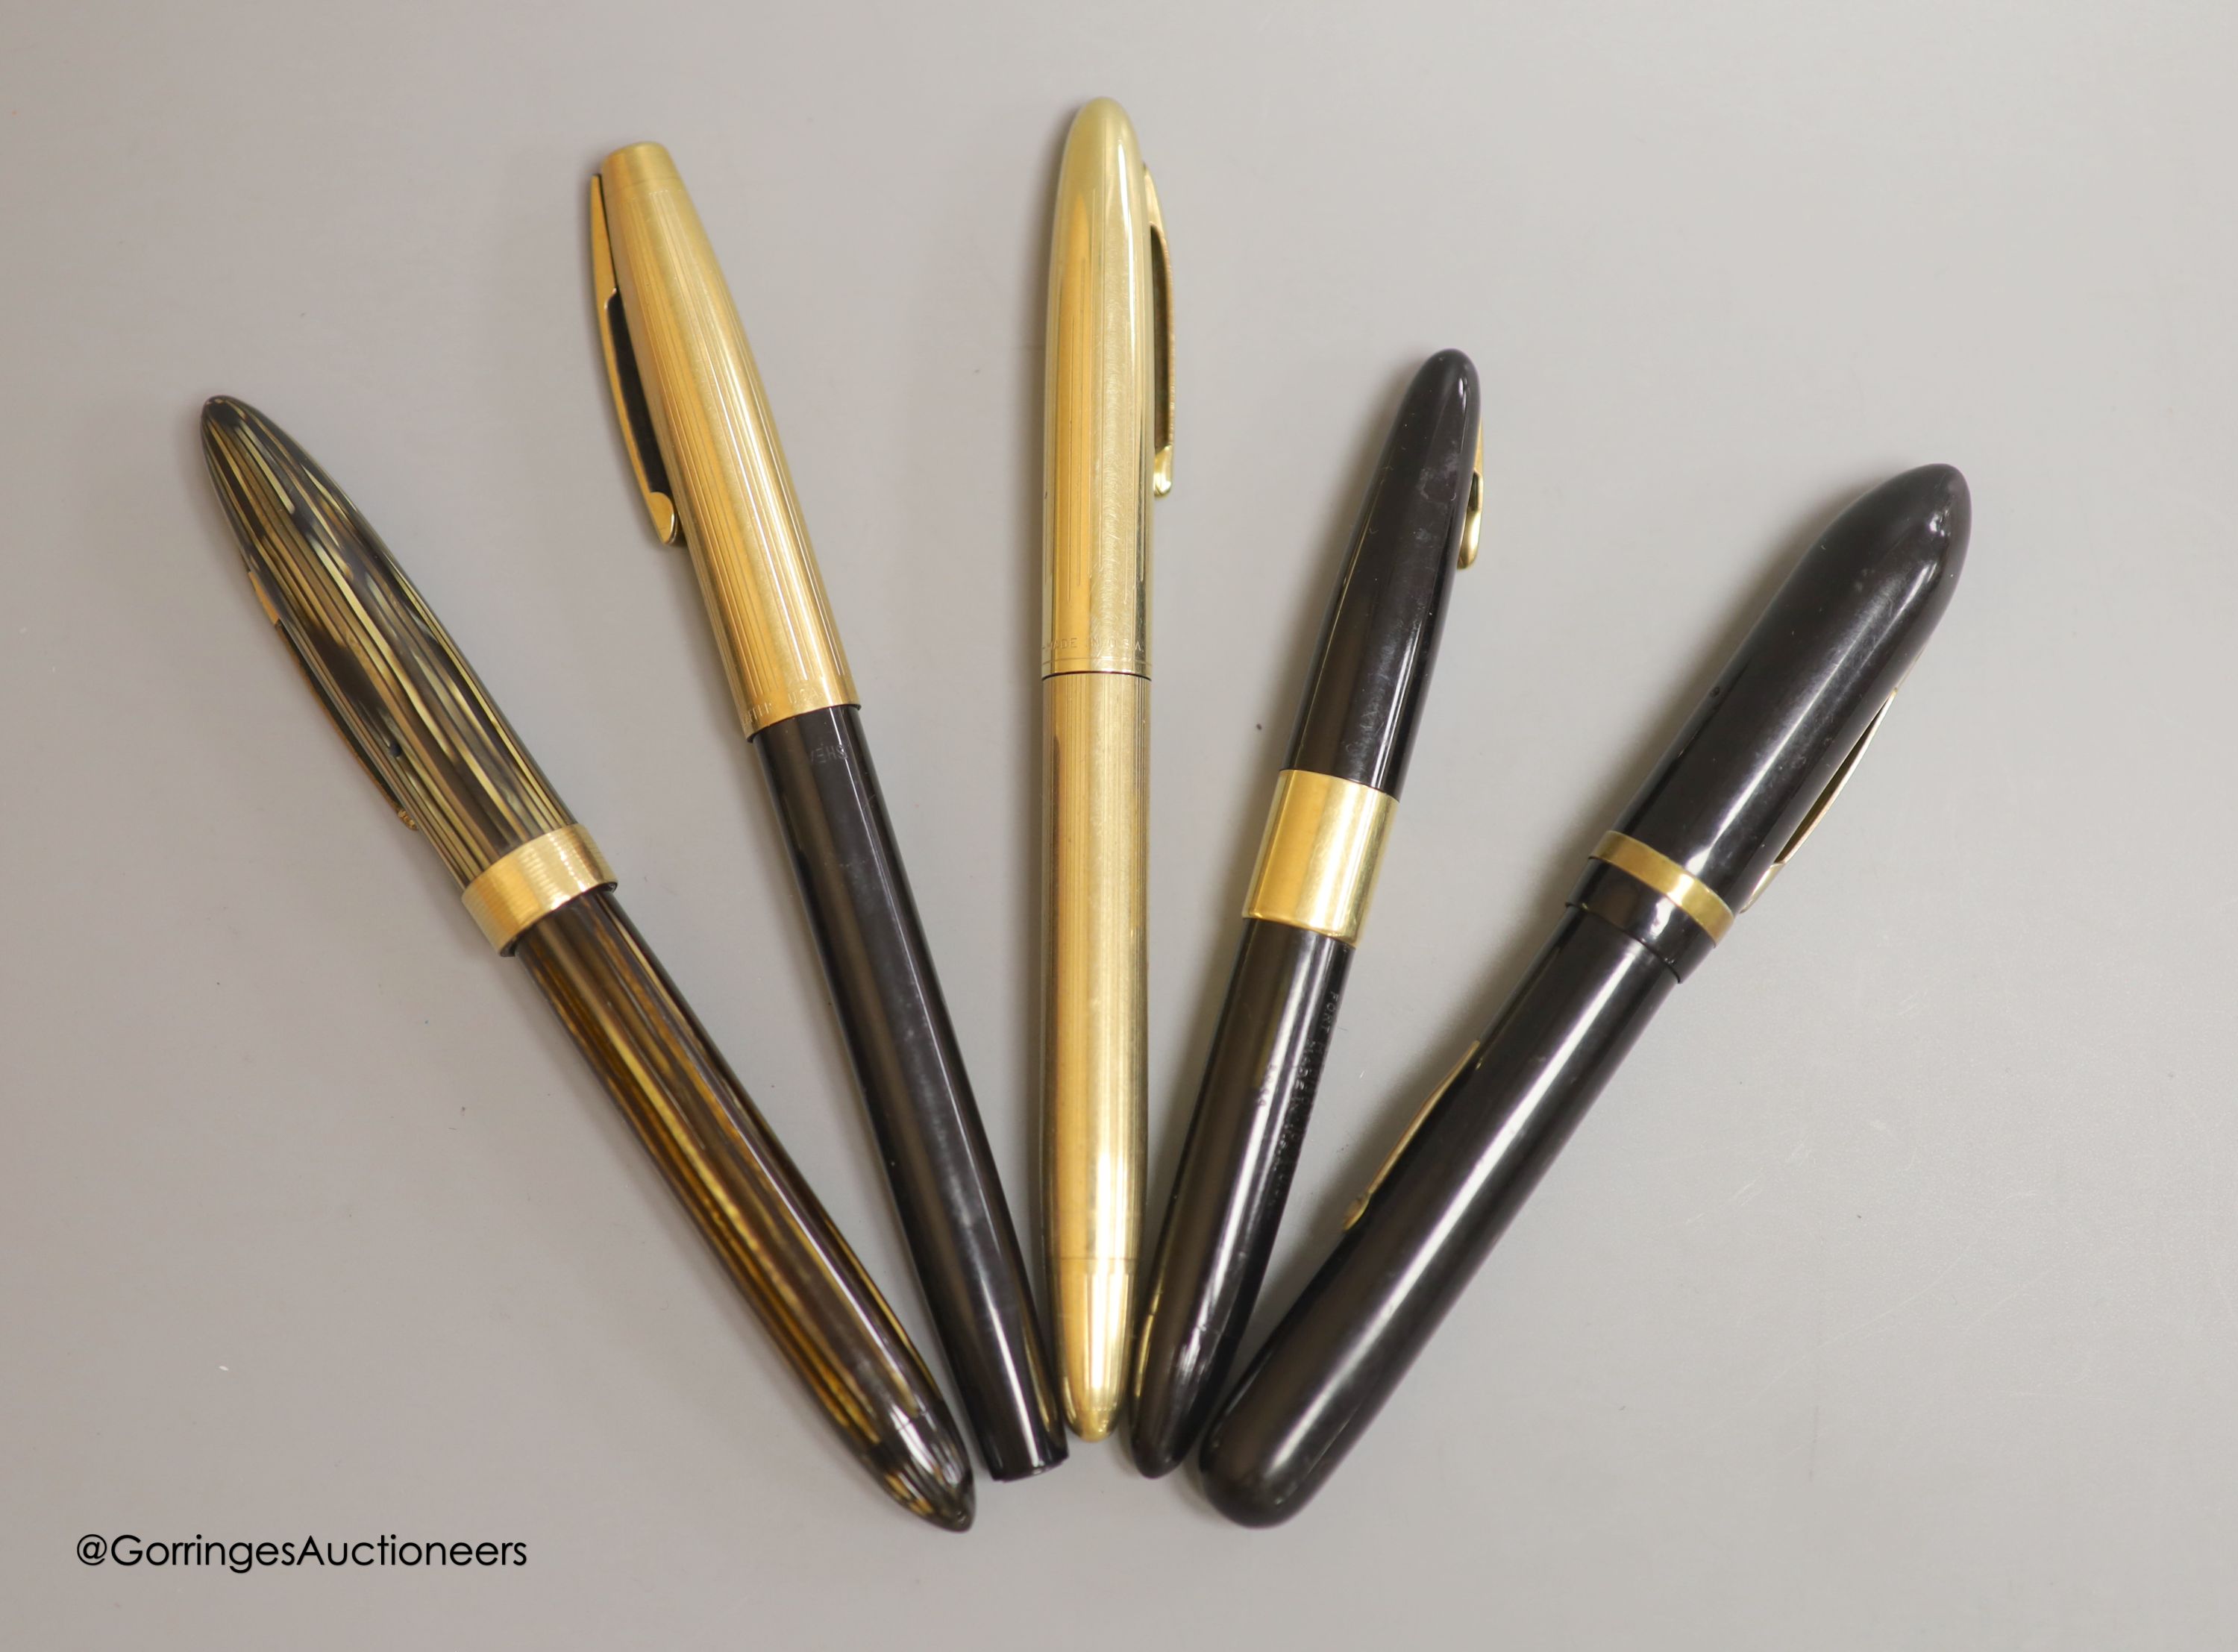 Five Sheaffer fountain pens